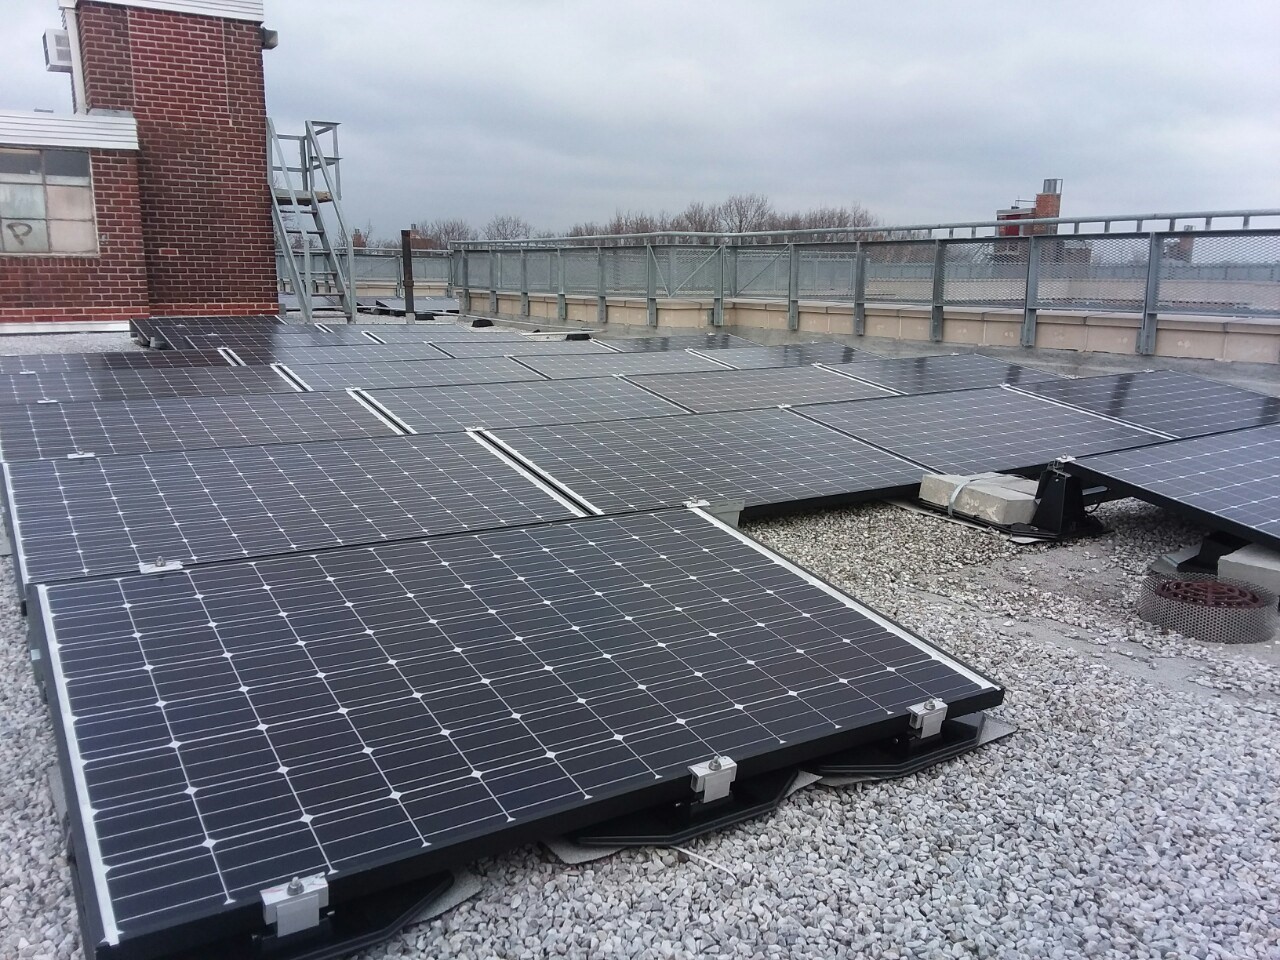 finished installation of solar panels